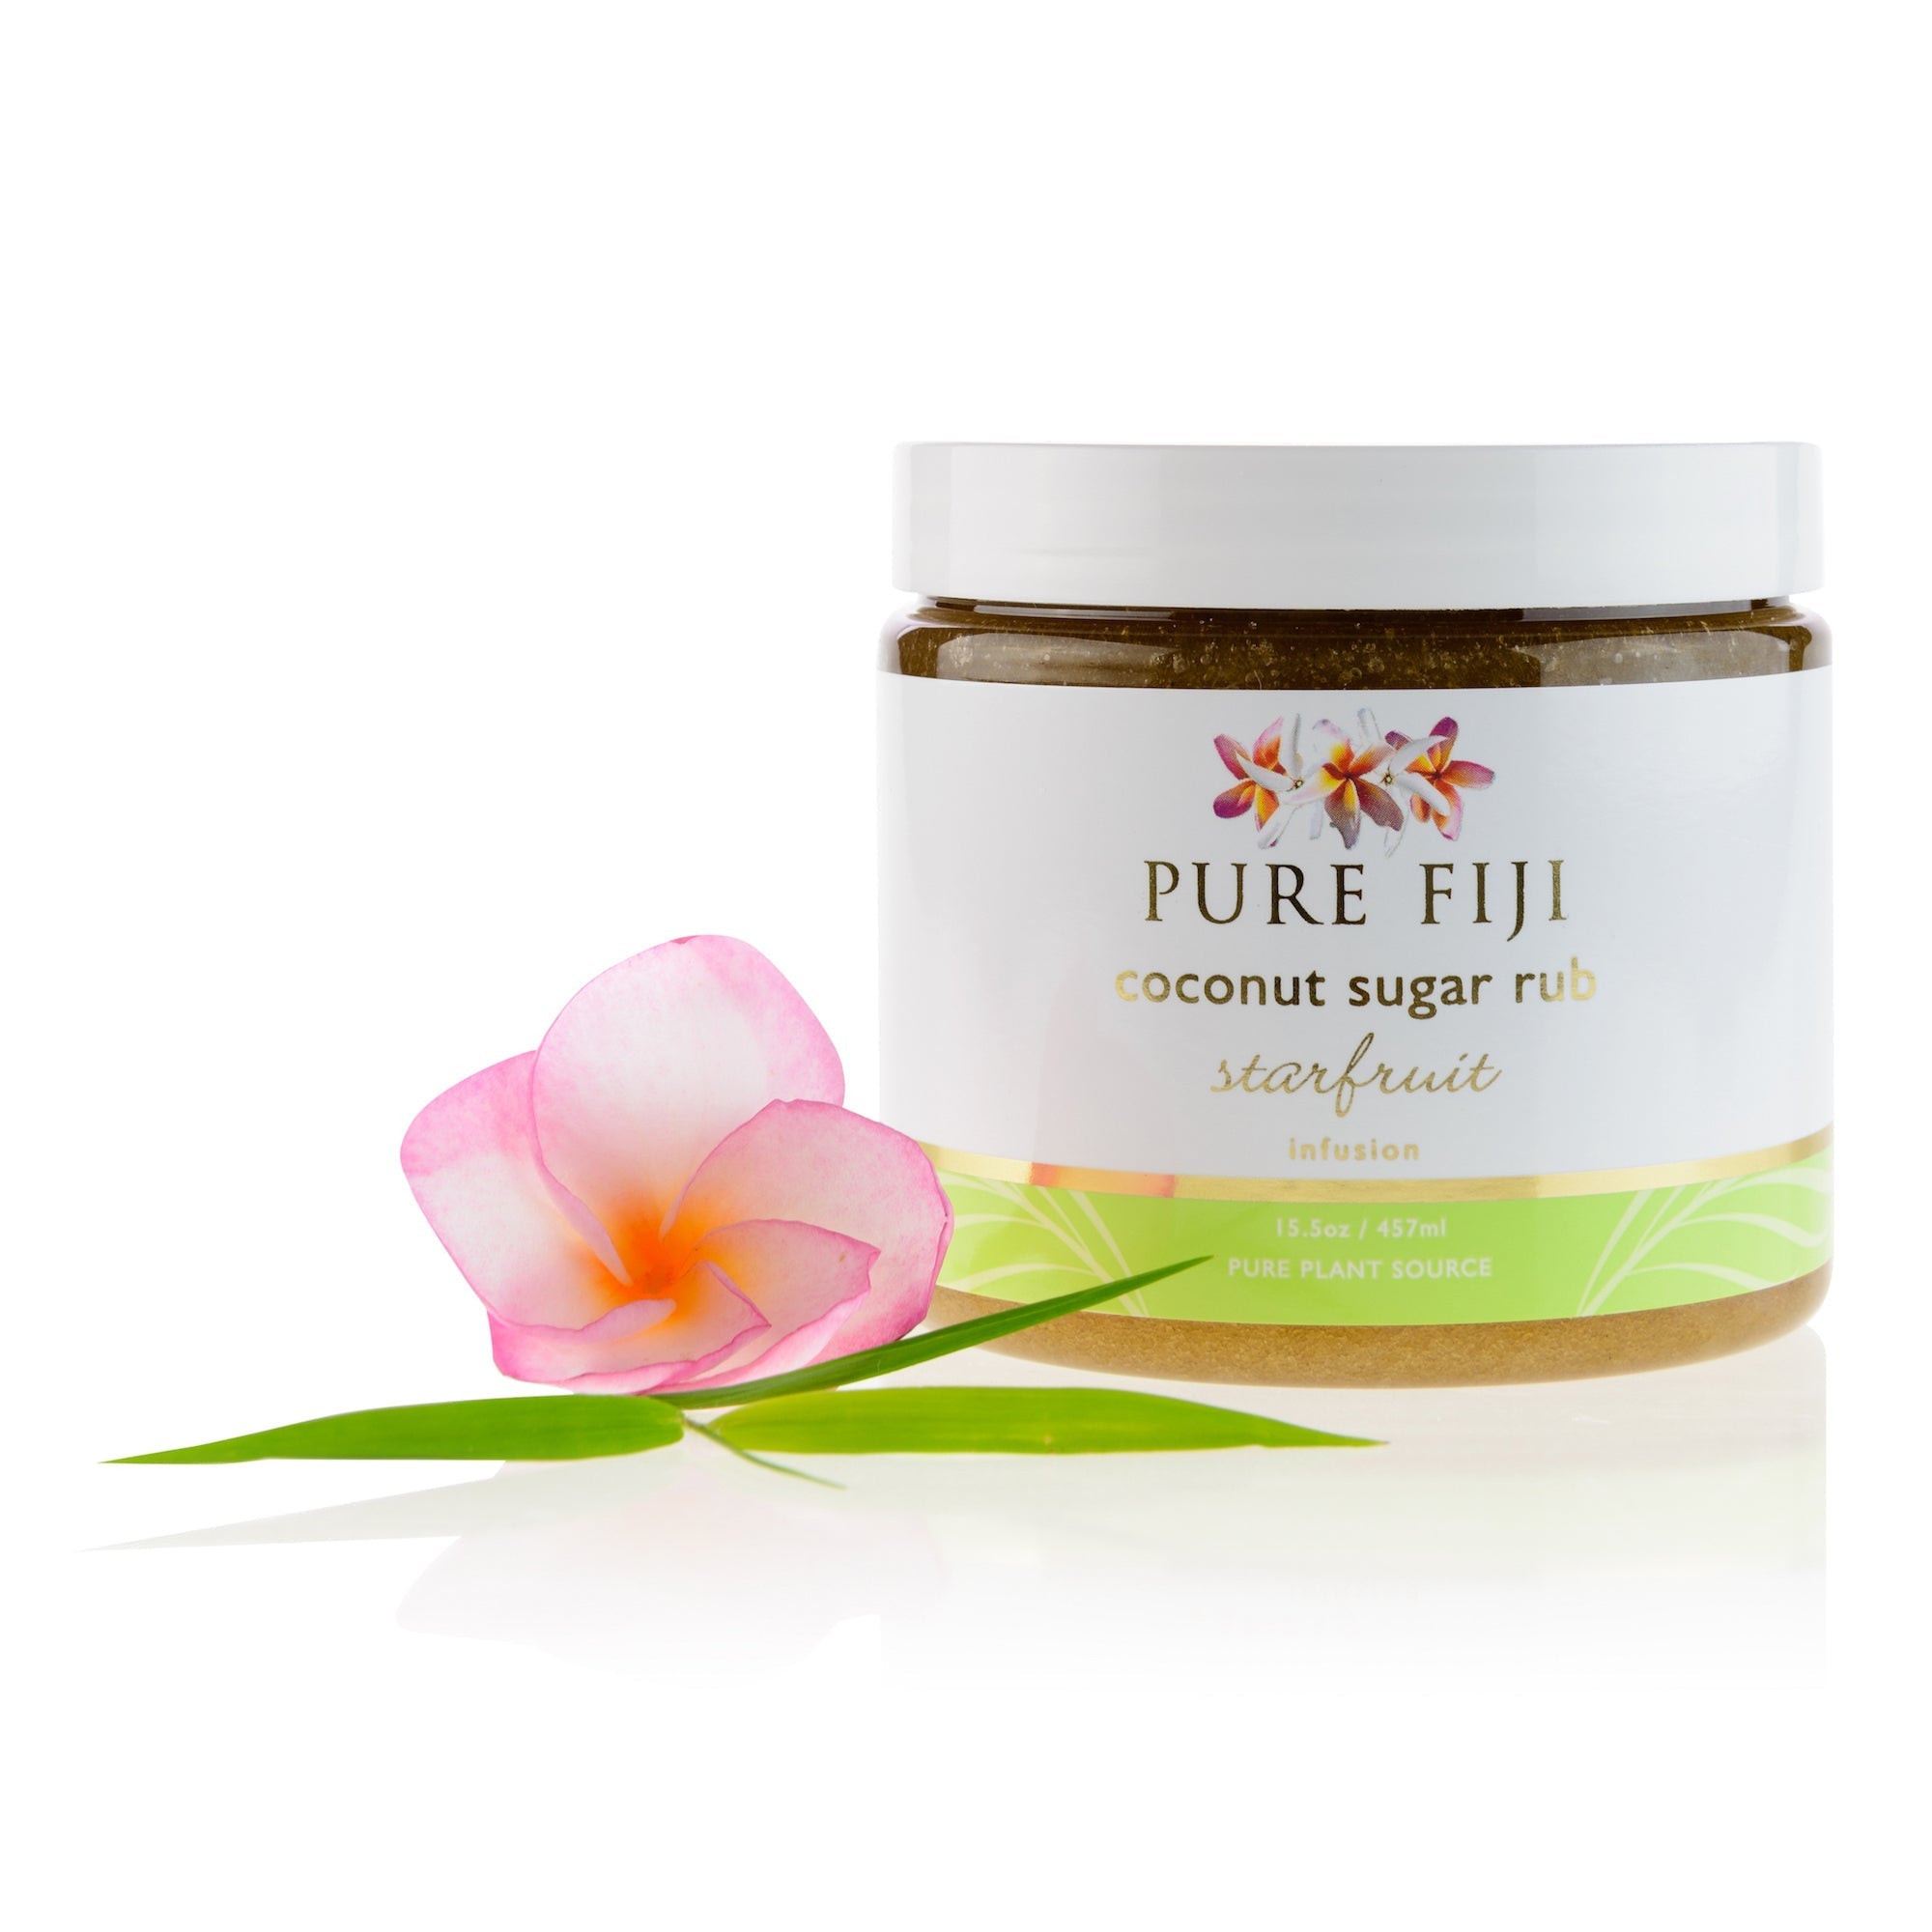 Pure Fiji Coconut Sugar Rub / Starfruit